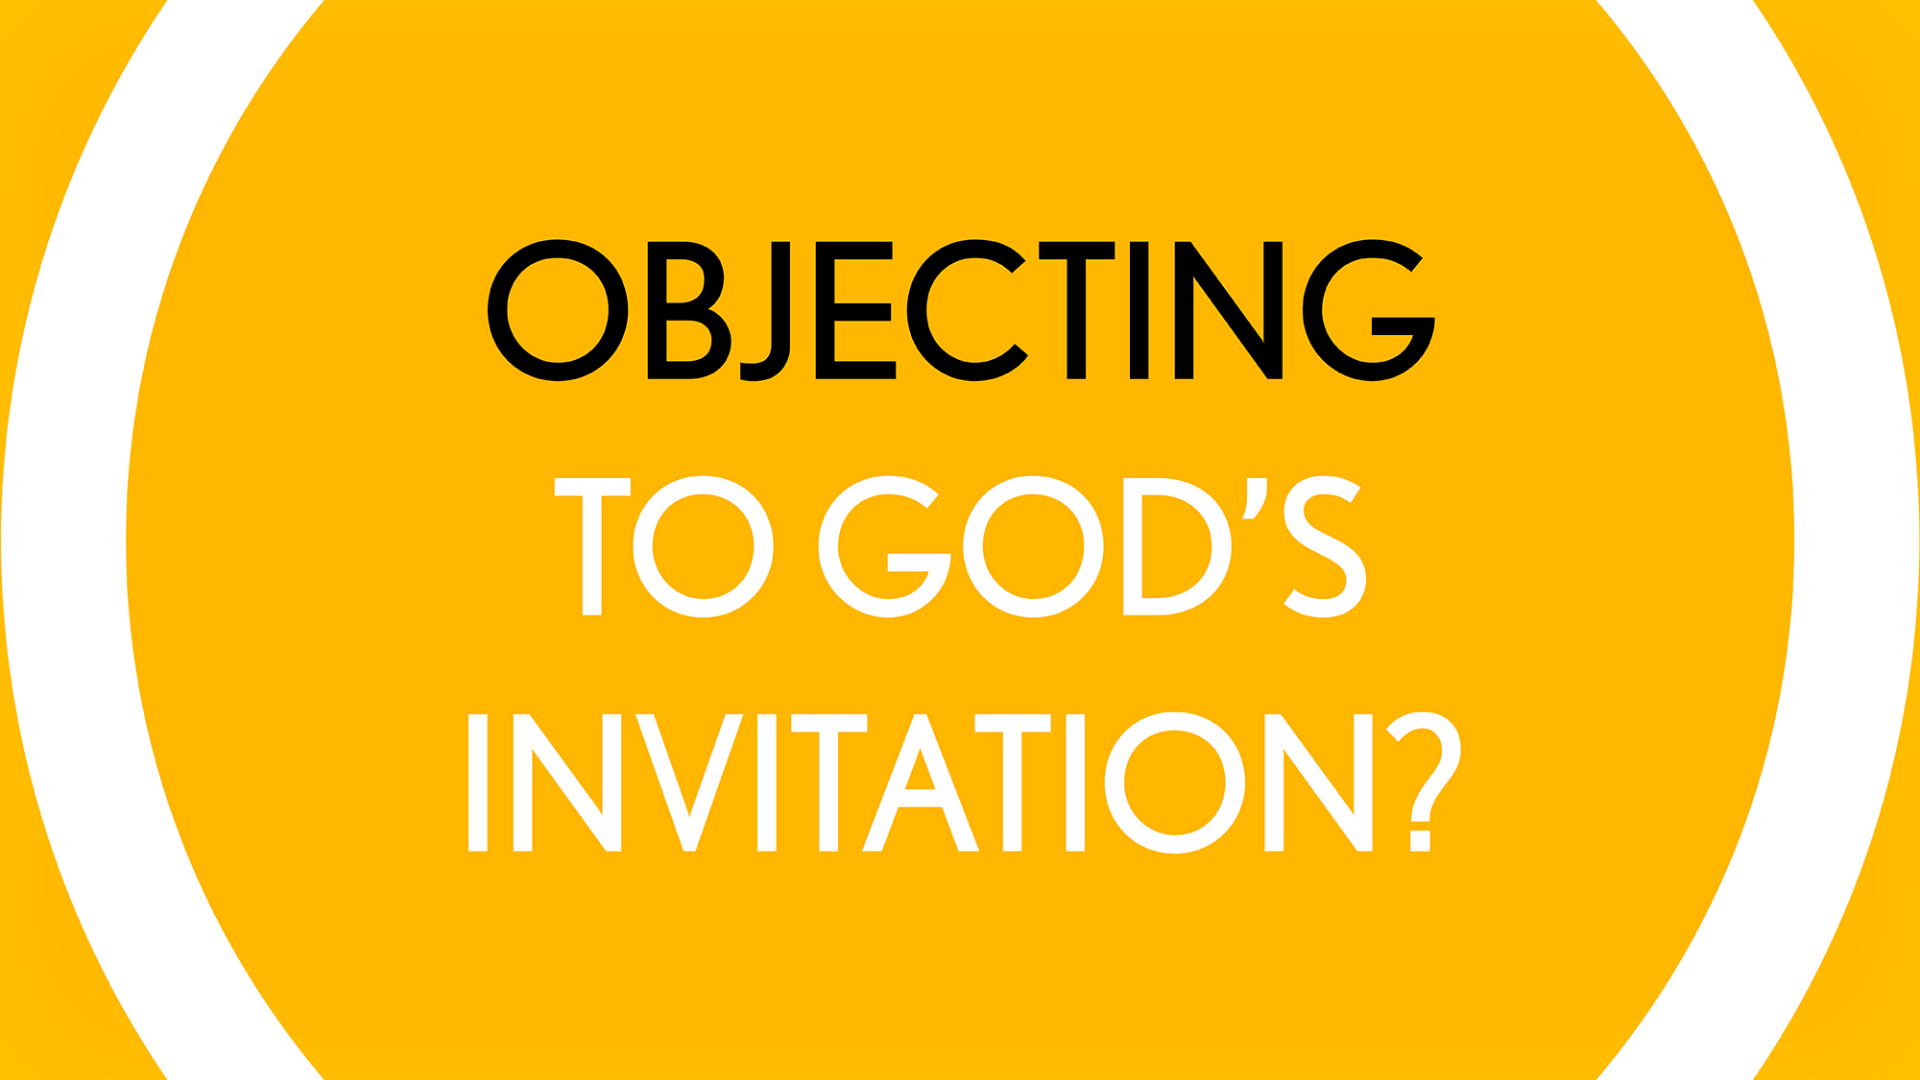 Objecting to God's Invitation?